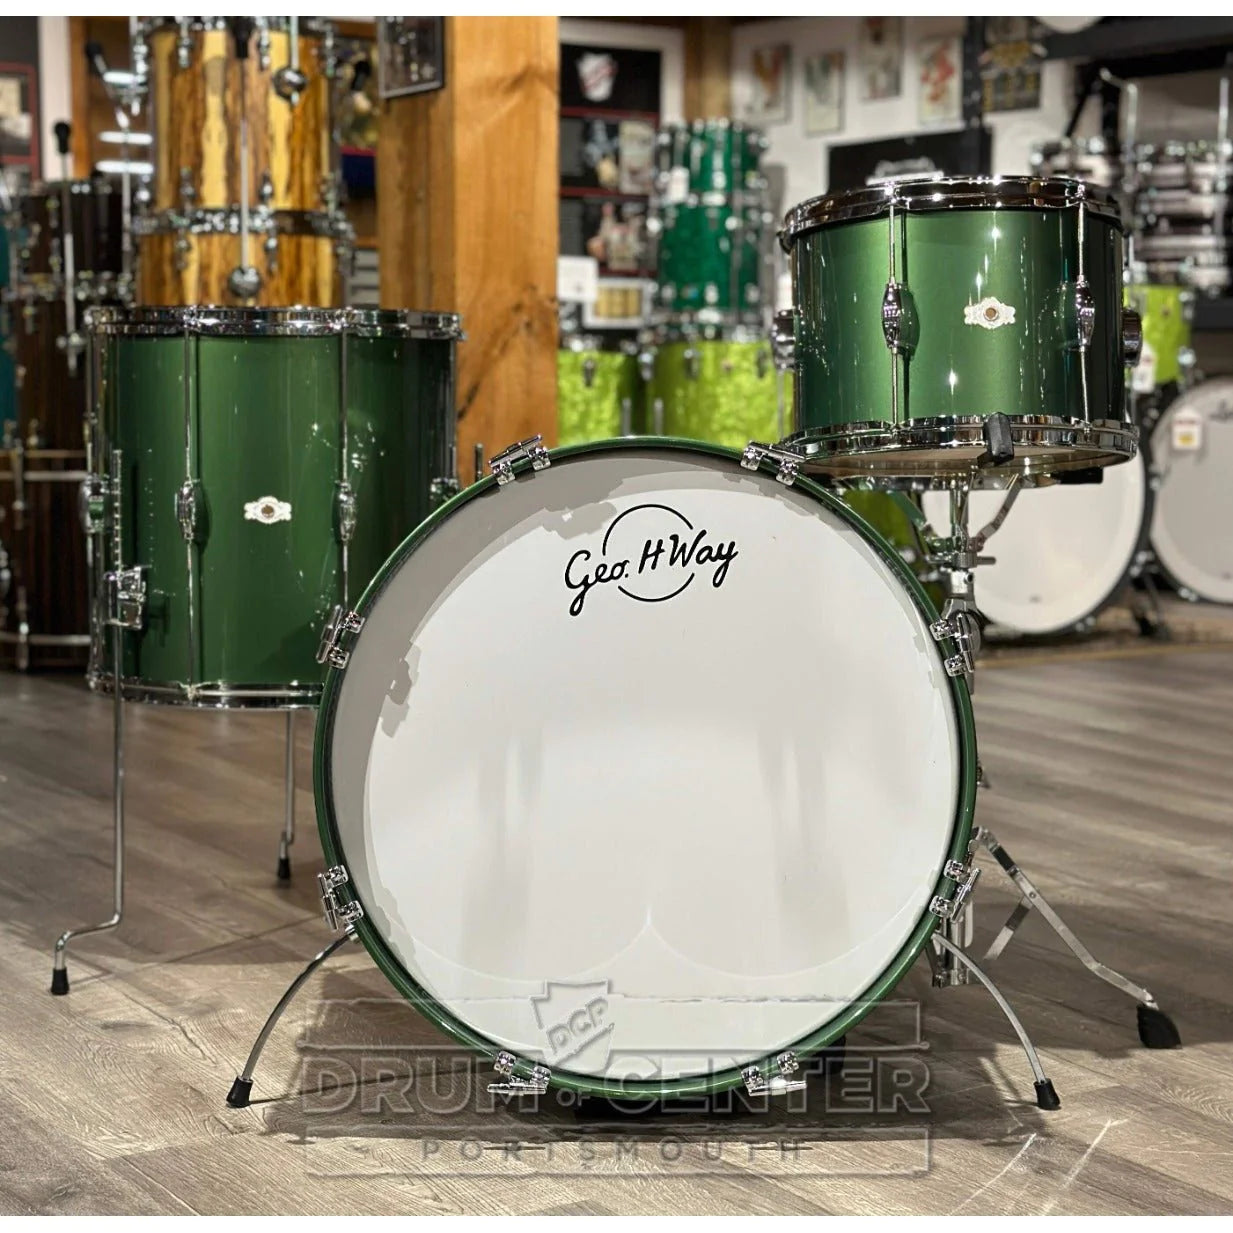 George Way Tuxedo Studio “Kaddy Green” 3PC Vintage Drum Set 